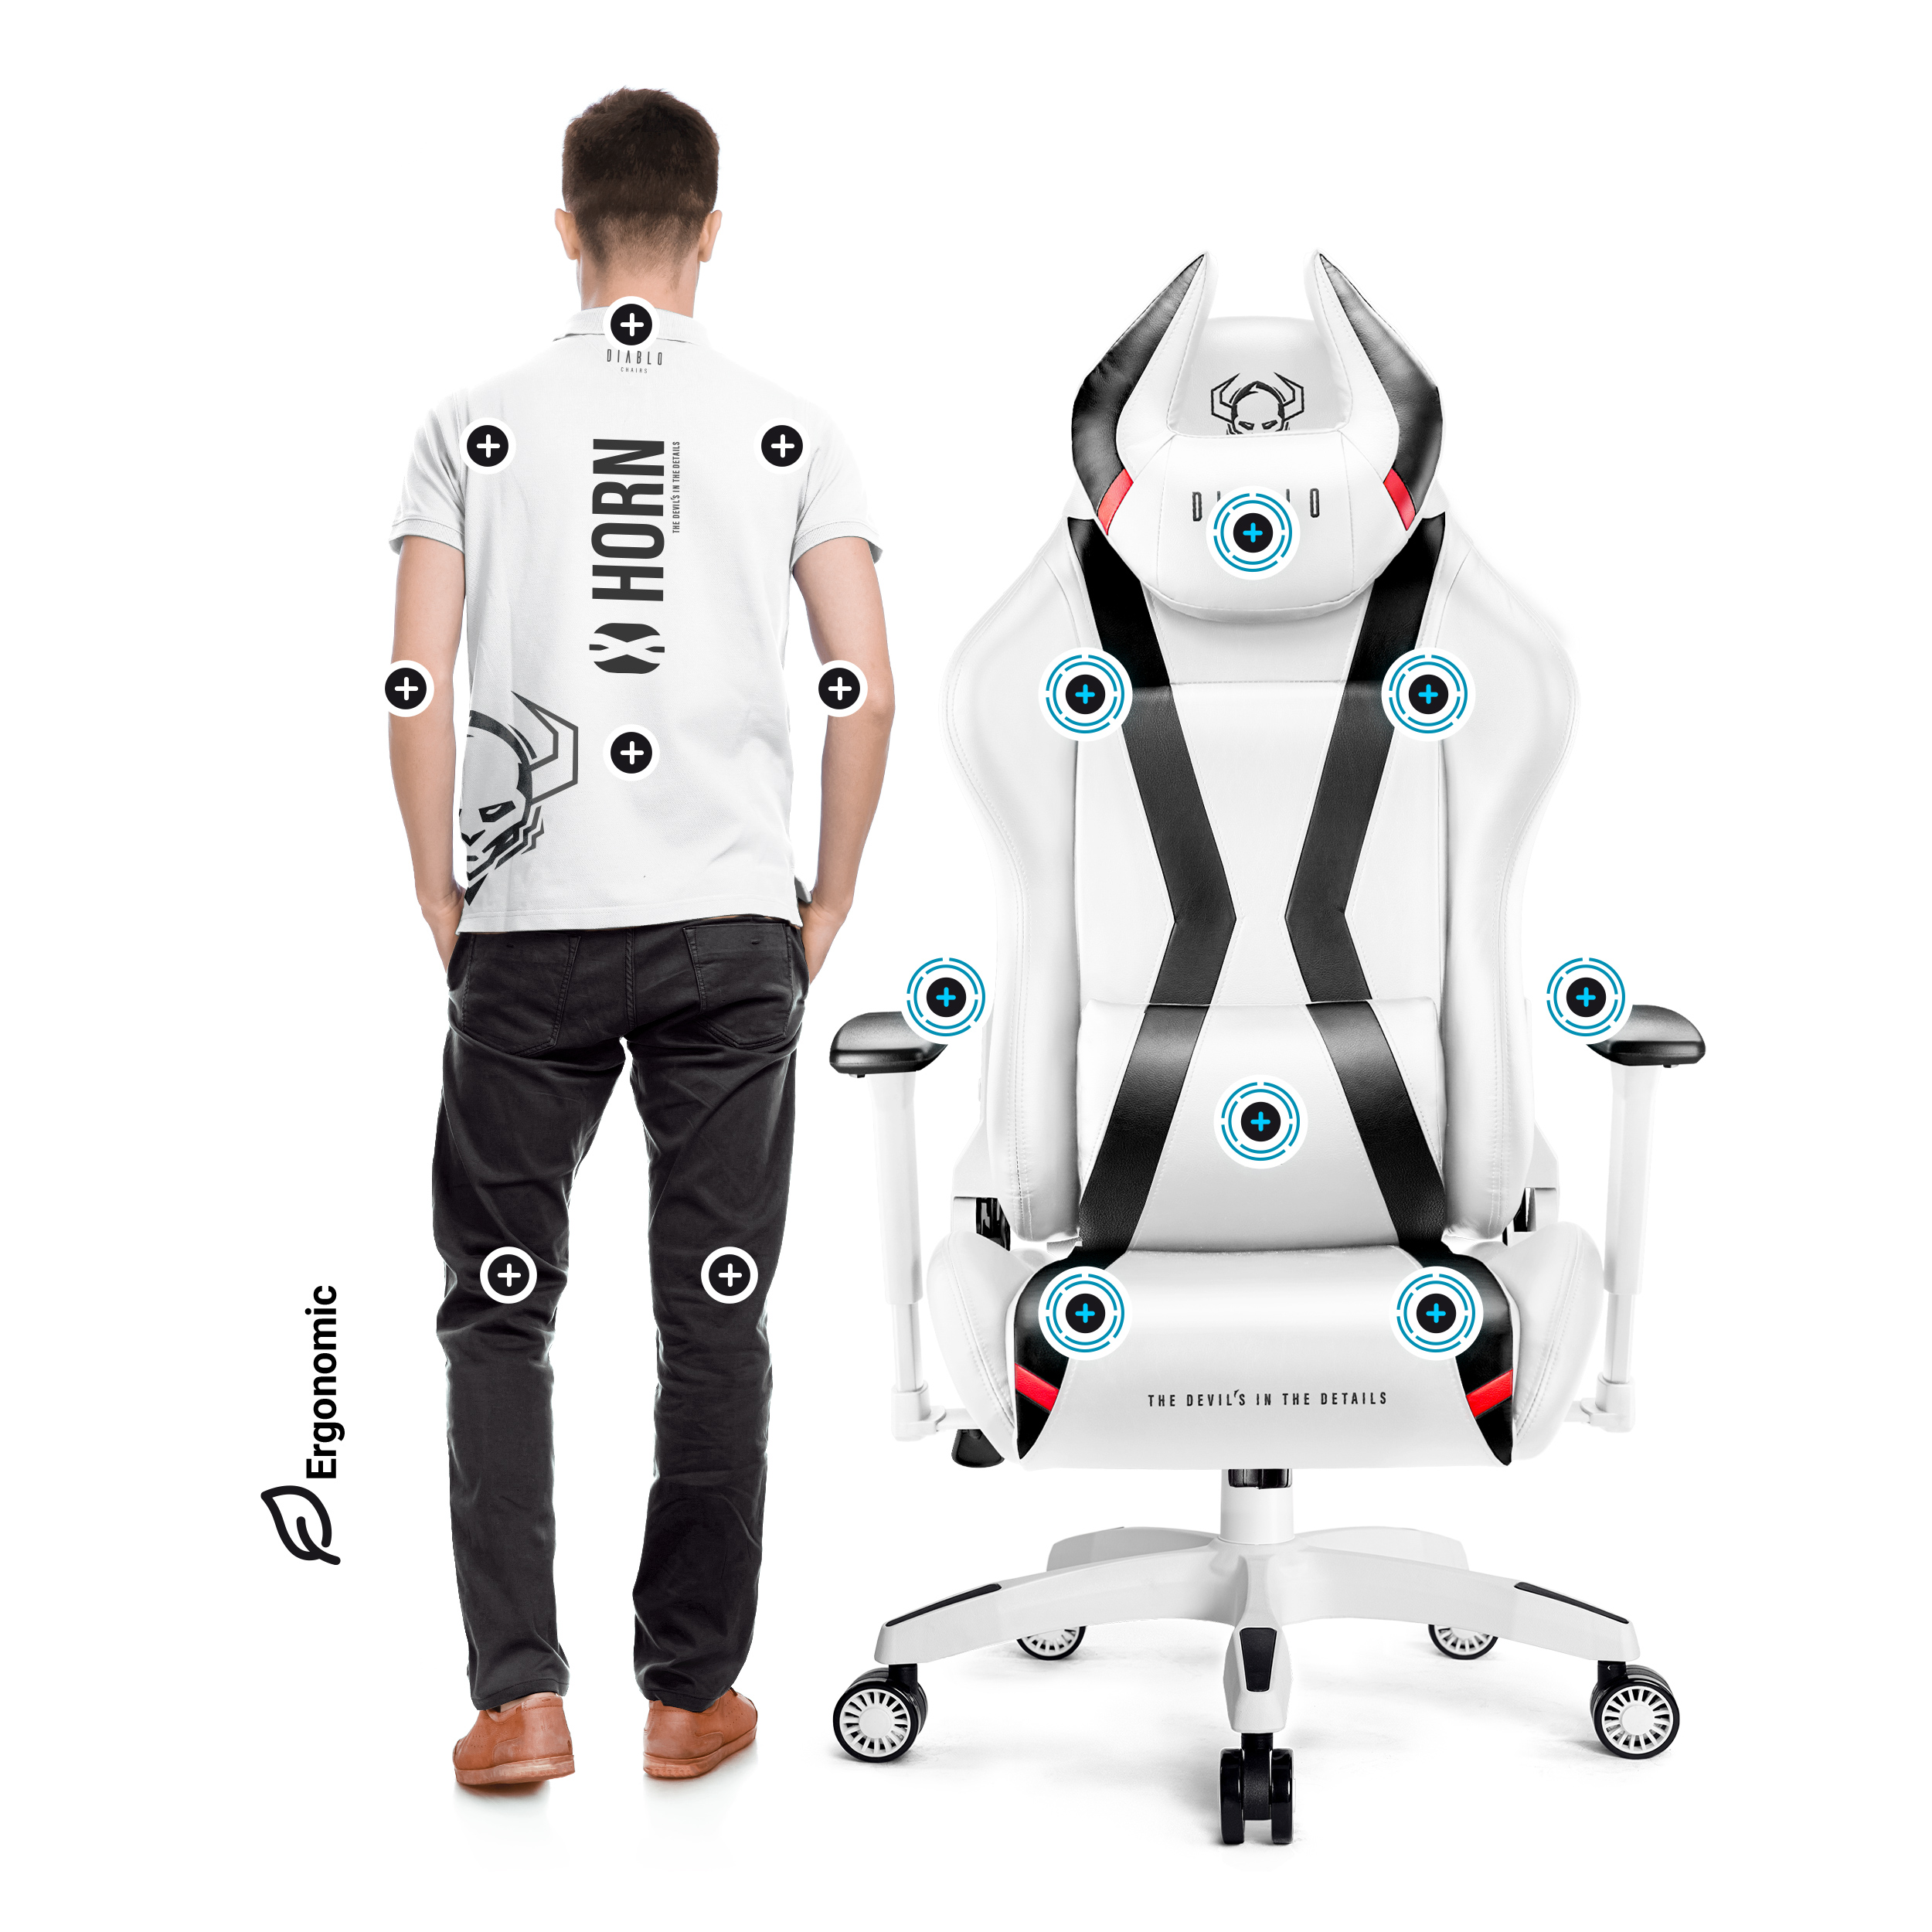 GAMING white 2.0 Gaming DIABLO CHAIRS KING STUHL Chair, X-HORN